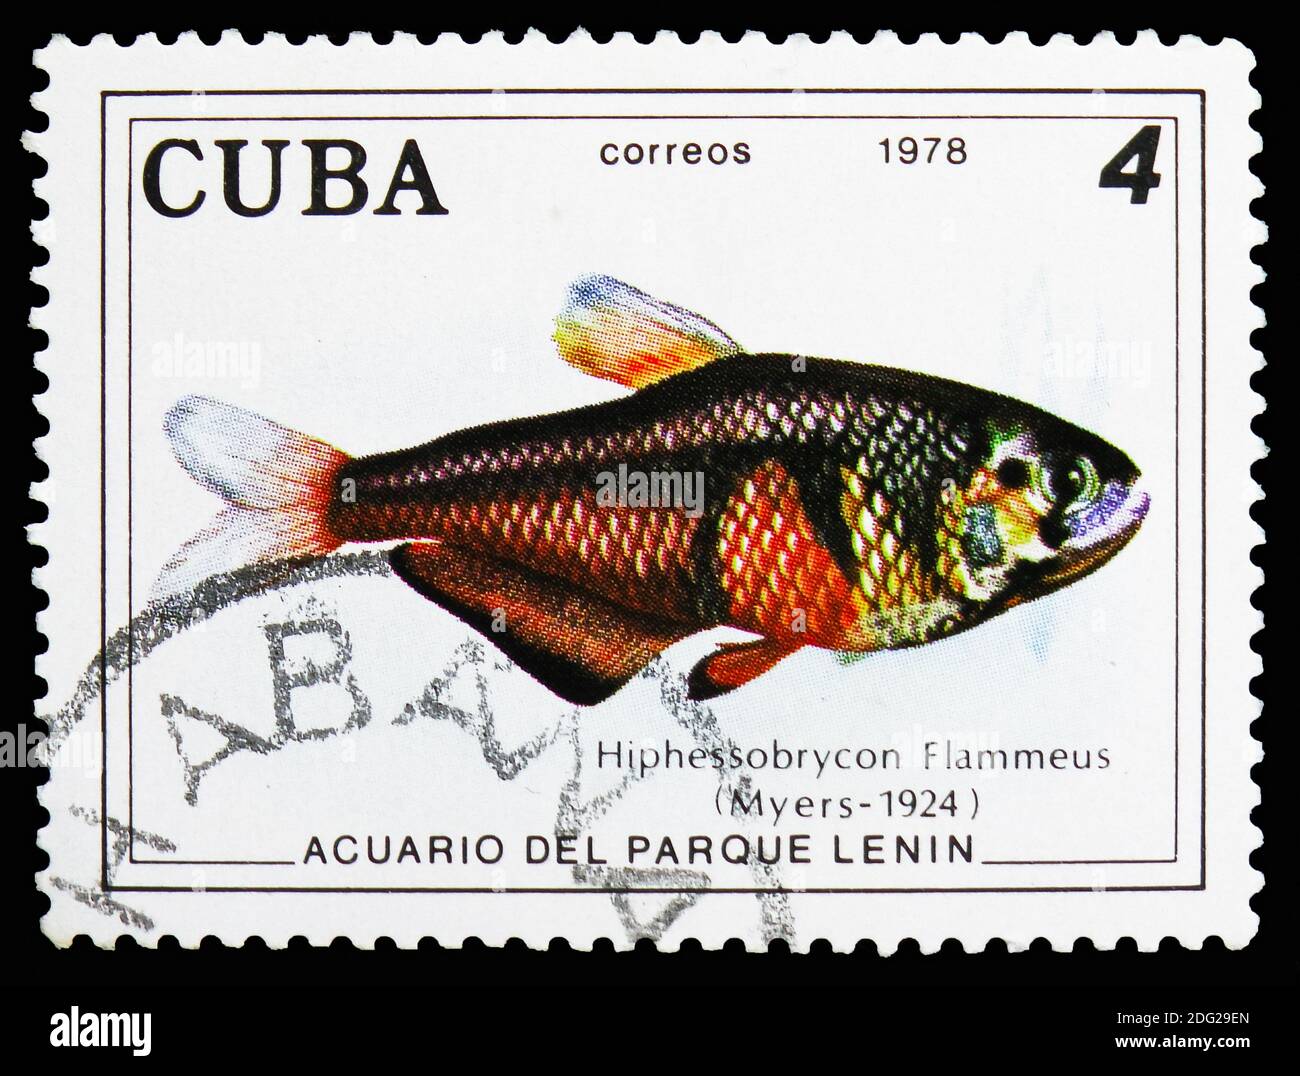 MOSCOW, RUSSIA - OCTOBER 21, 2018: A stamp printed in Cuba shows Rio Flame Tetra (Hyphessobrycon flammeus), Fish (in Lenin Park Aquarium, Havana) seri Stock Photo